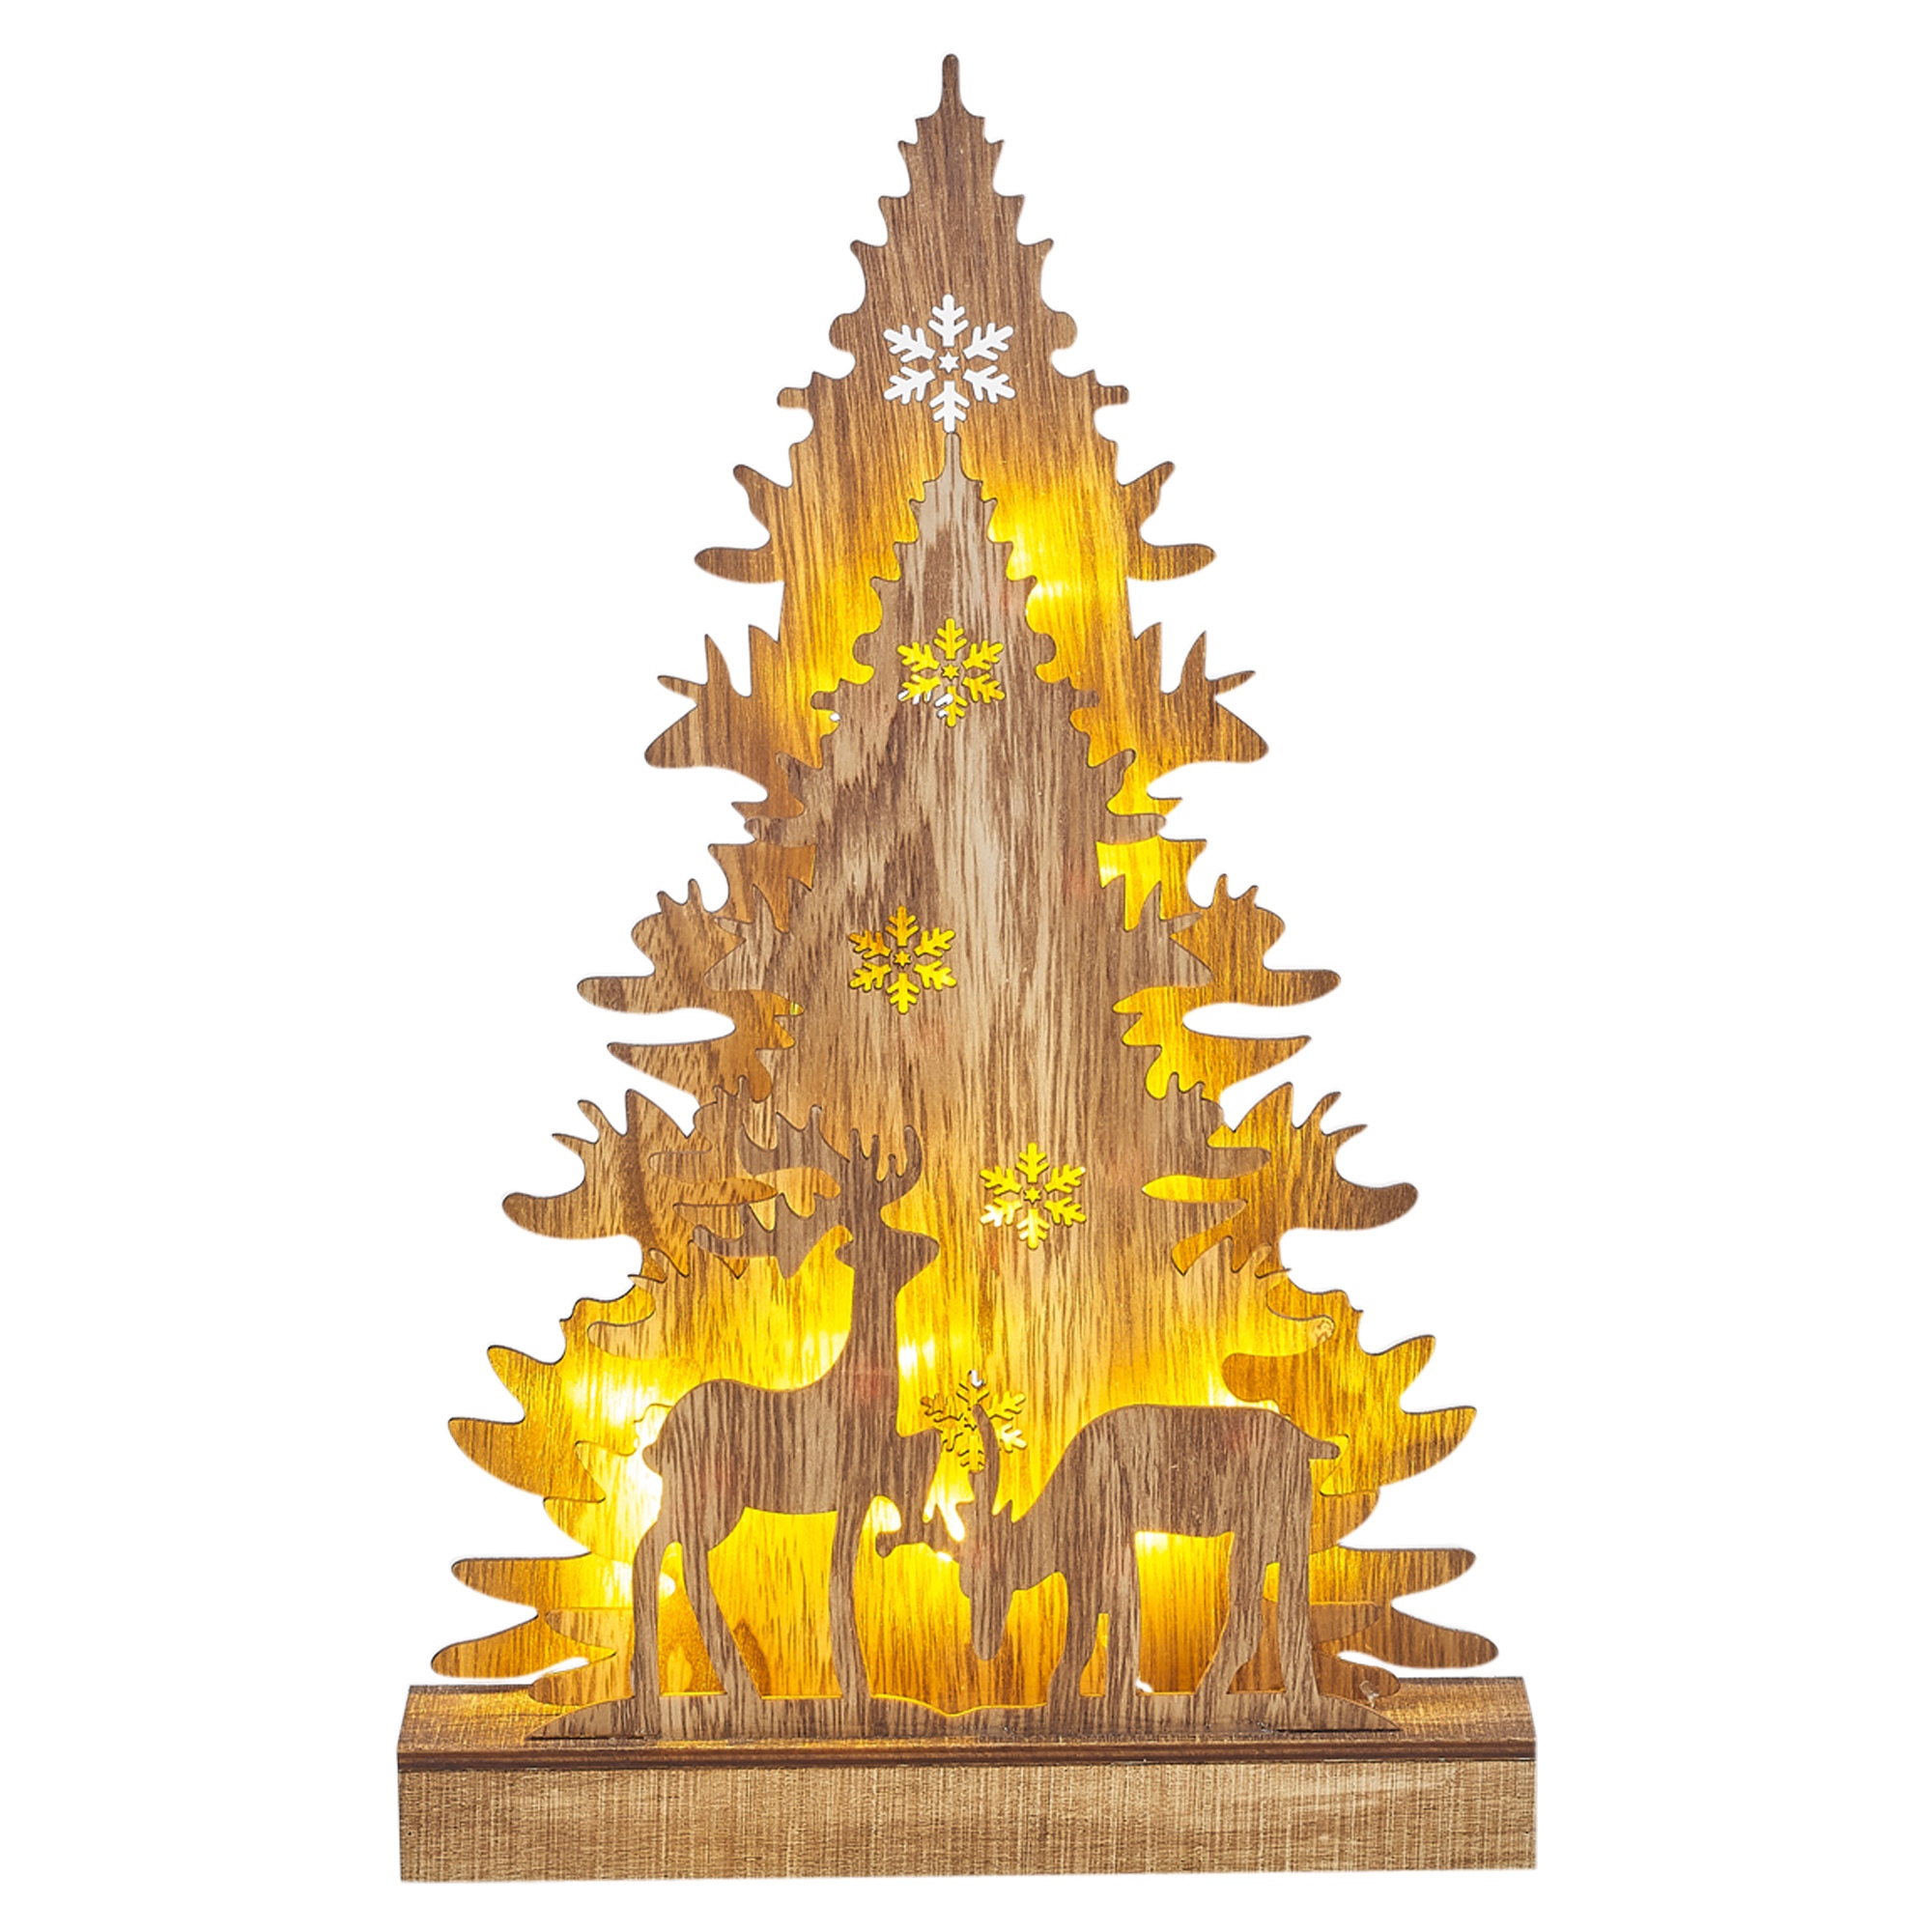 Wooden LED Light Up Christmas Scene 3D Effect Ornament Xmas Gift Home